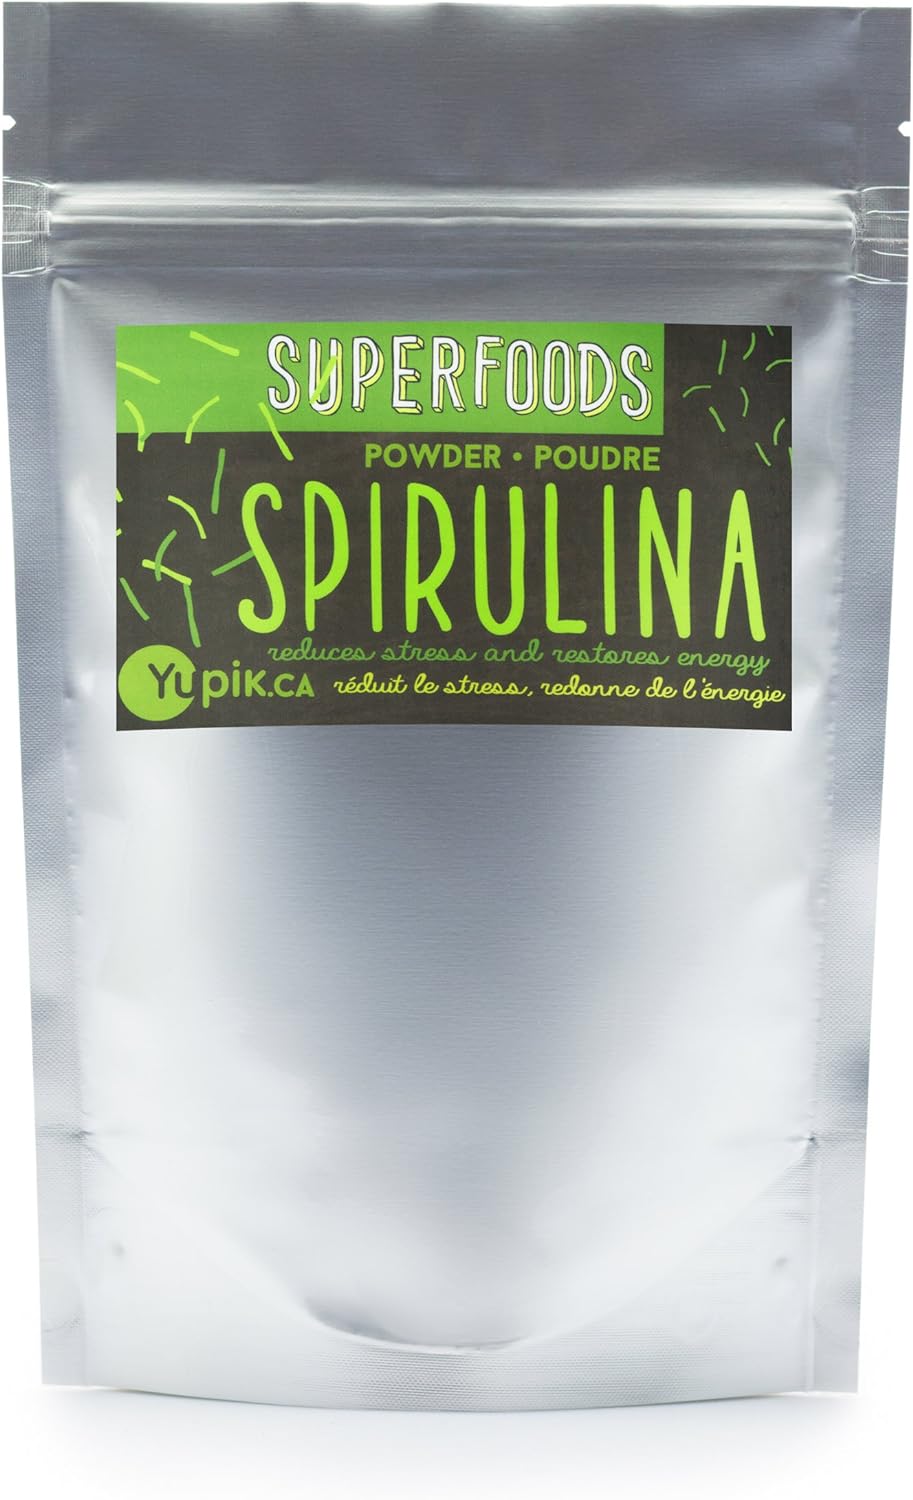 Yupik Organic Spirulina Superfood, 8.8 Ounce, Non-GMO, Vegan, Gluten-Free